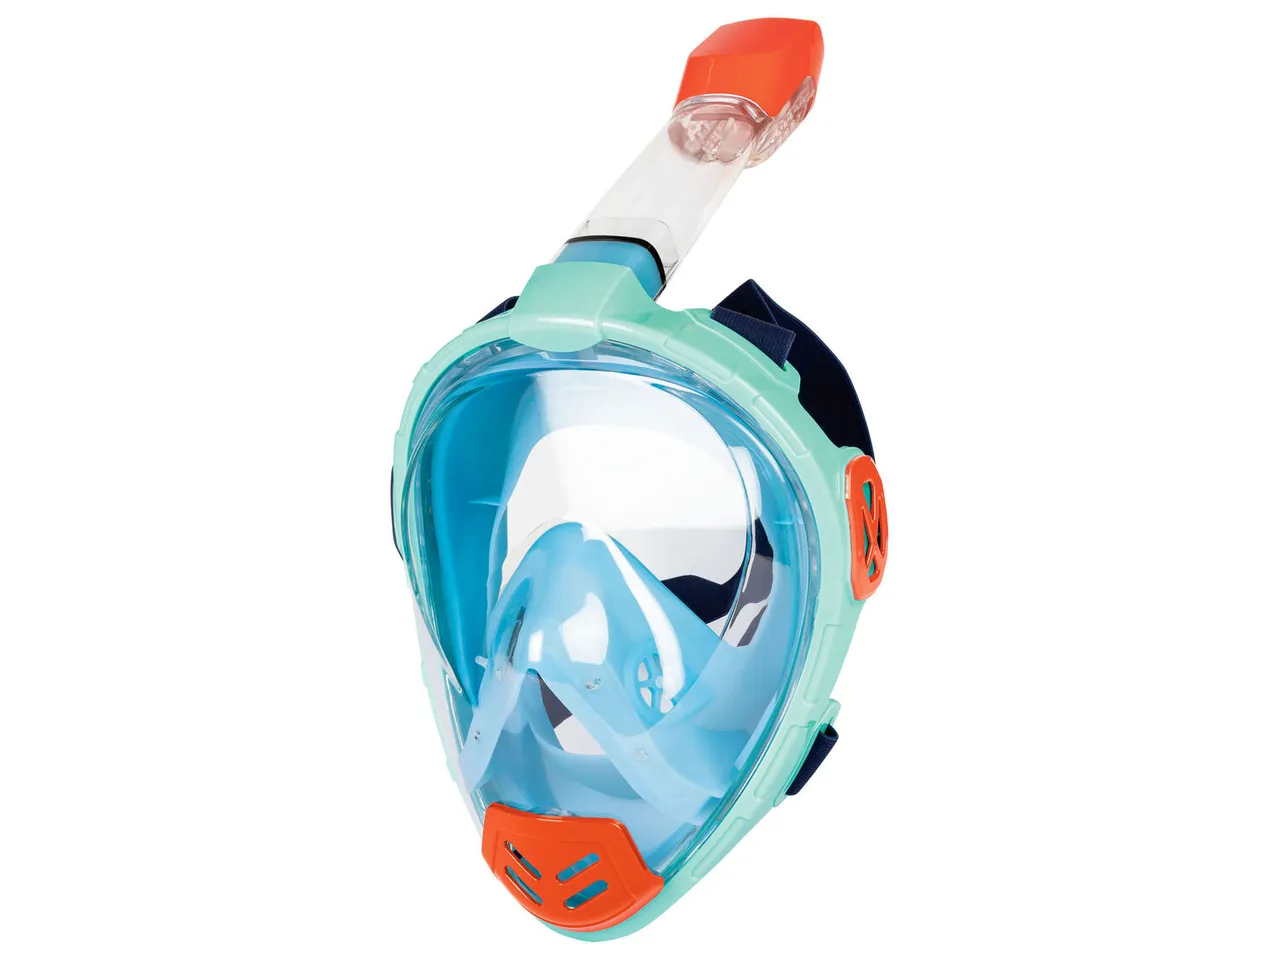 Maschera per snorkeling , prezzo 24.99 EUR 
Maschera per snorkeling Misure: S-XL ...